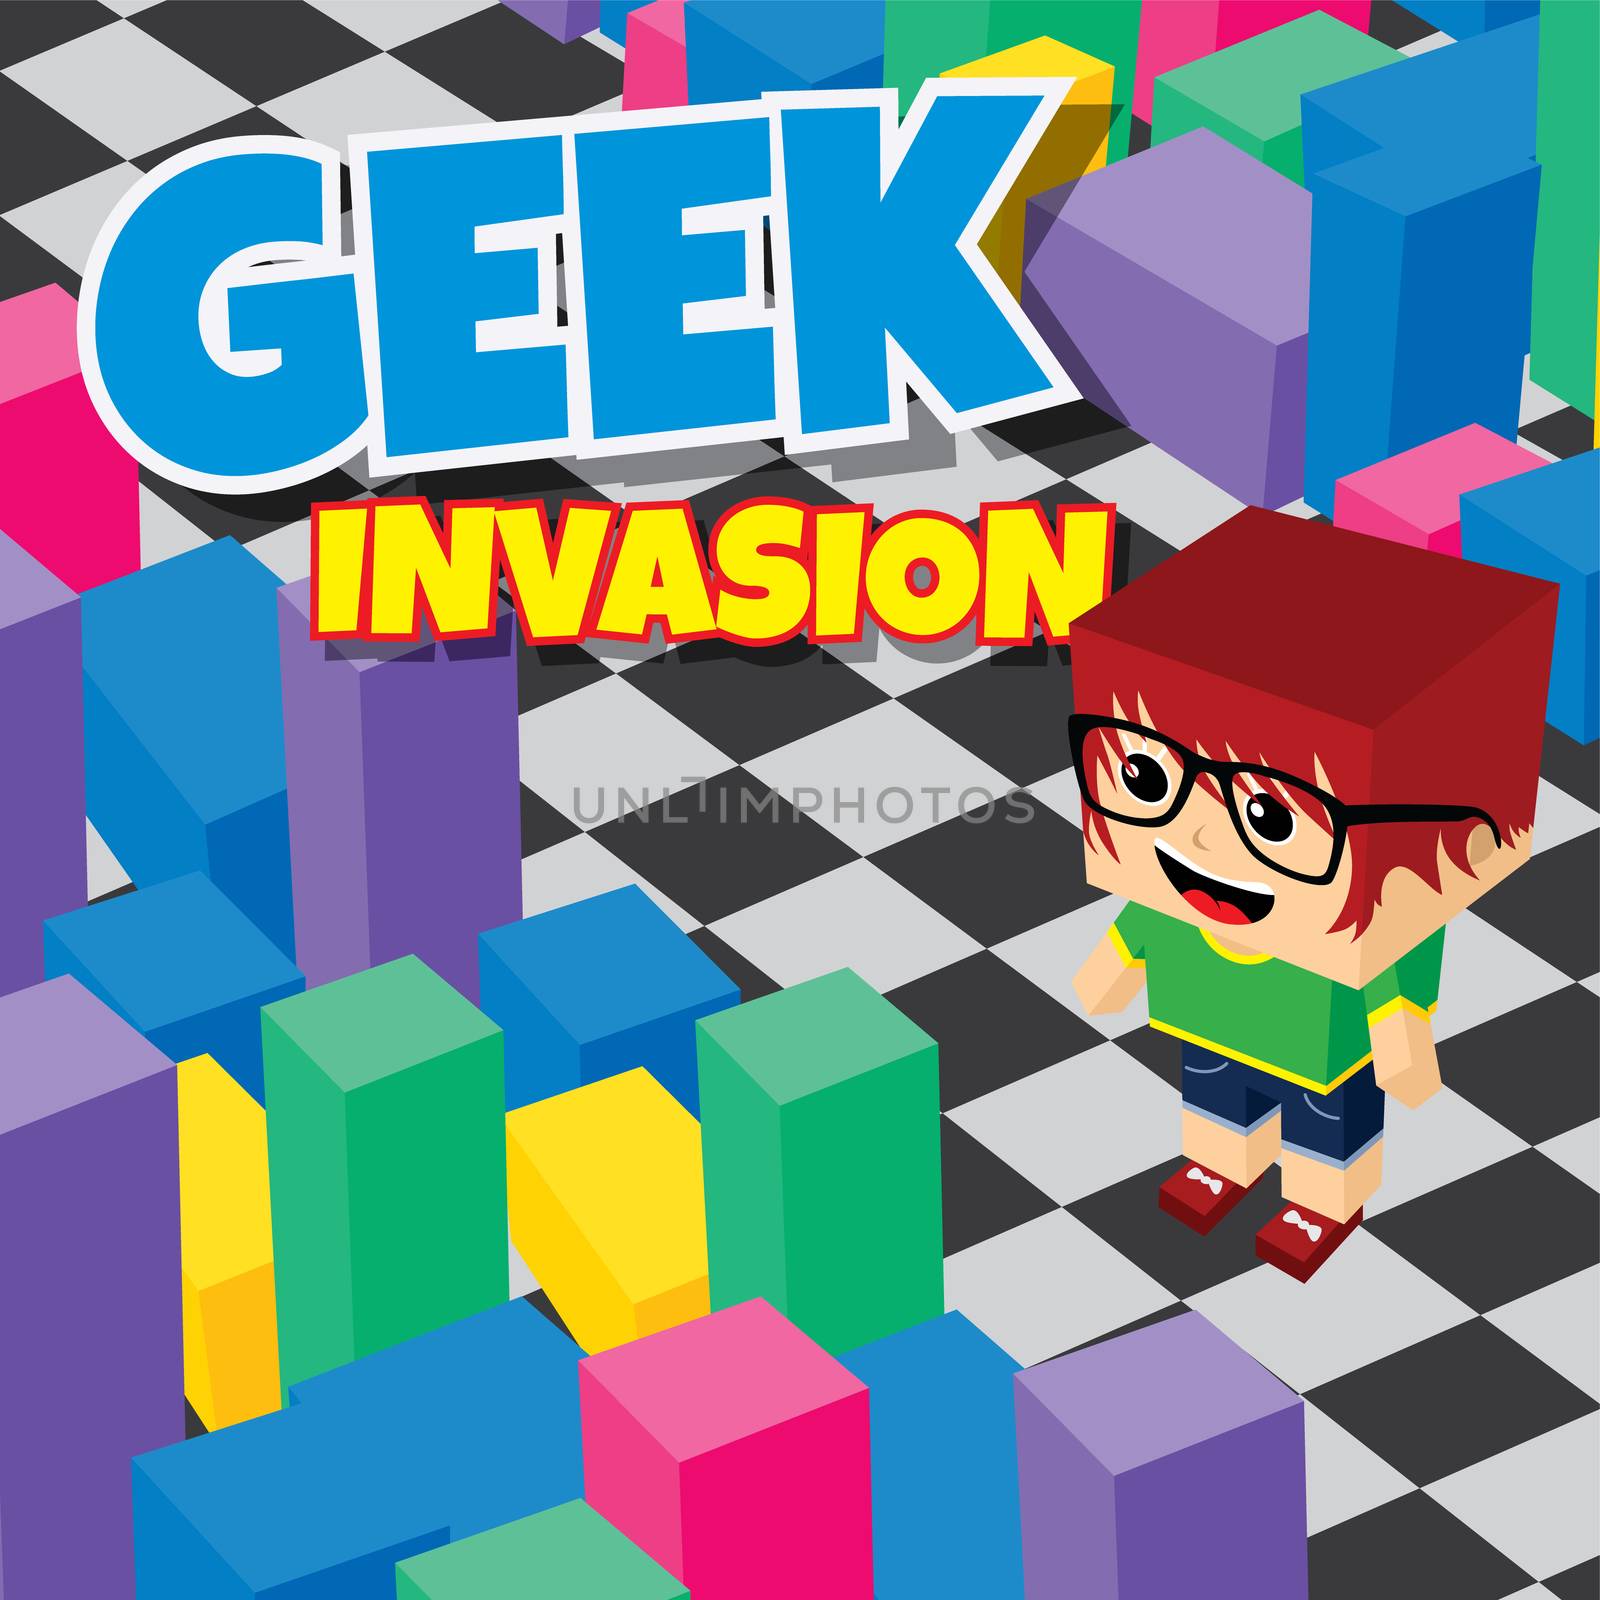 geek boy invasion video game asset isometric vector